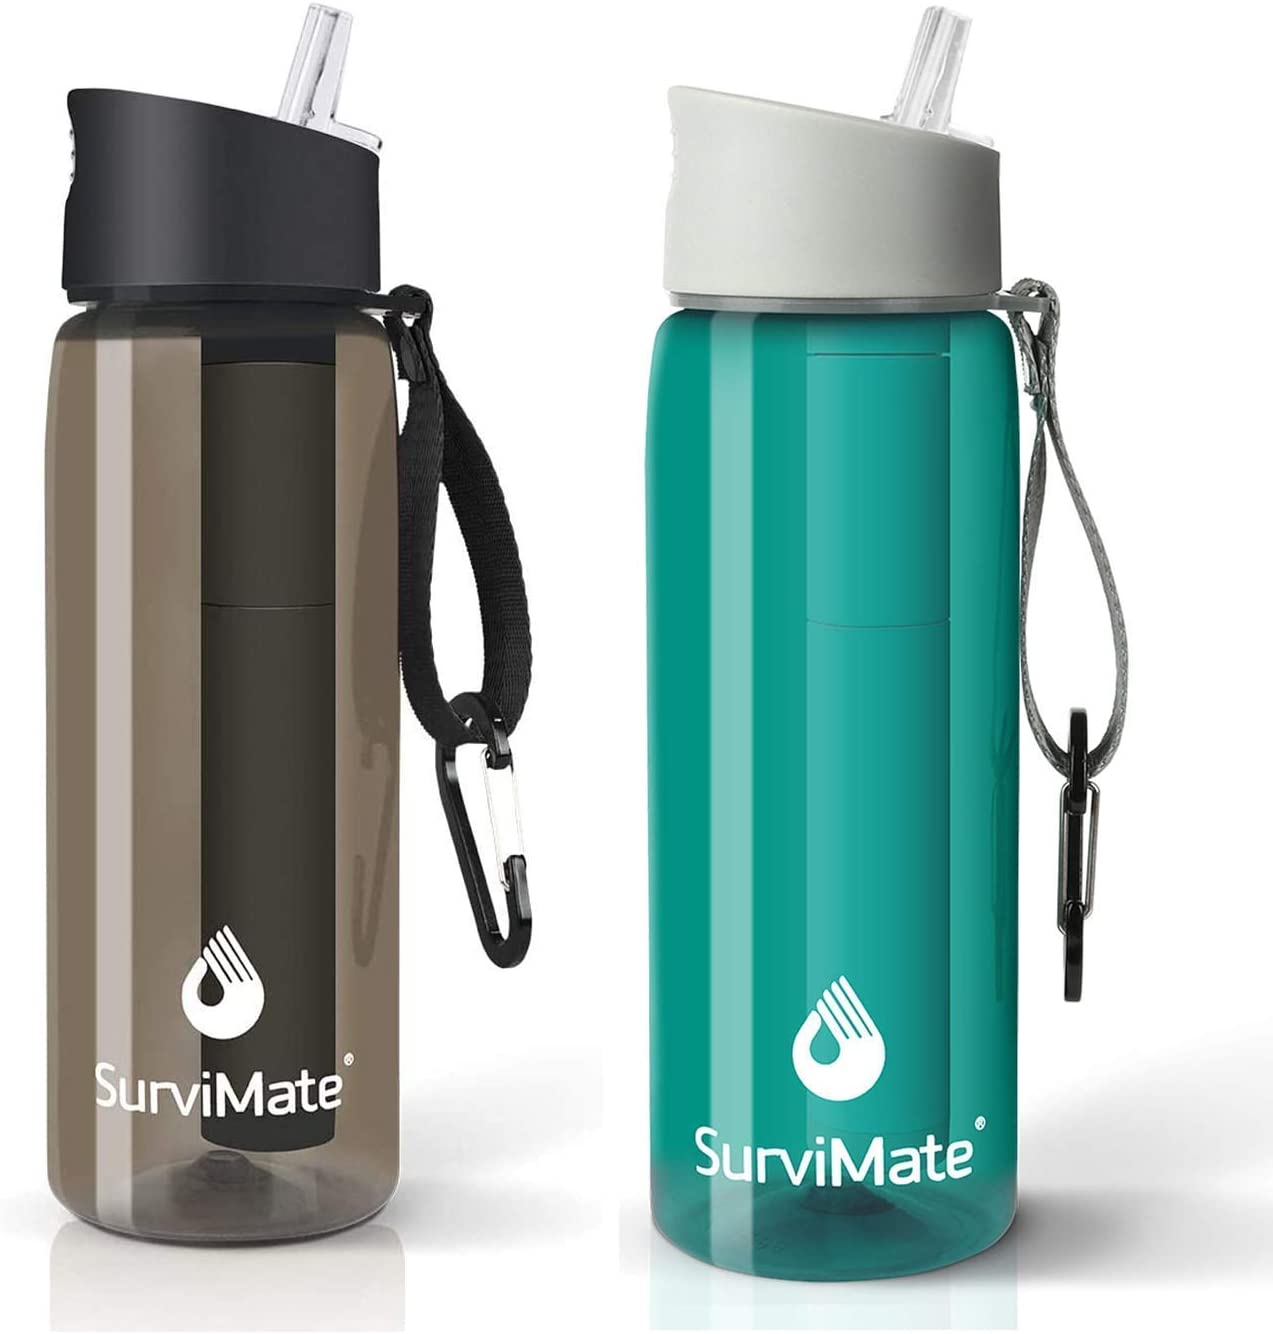 SurviMate Black and Teal Filtered Water Bottles